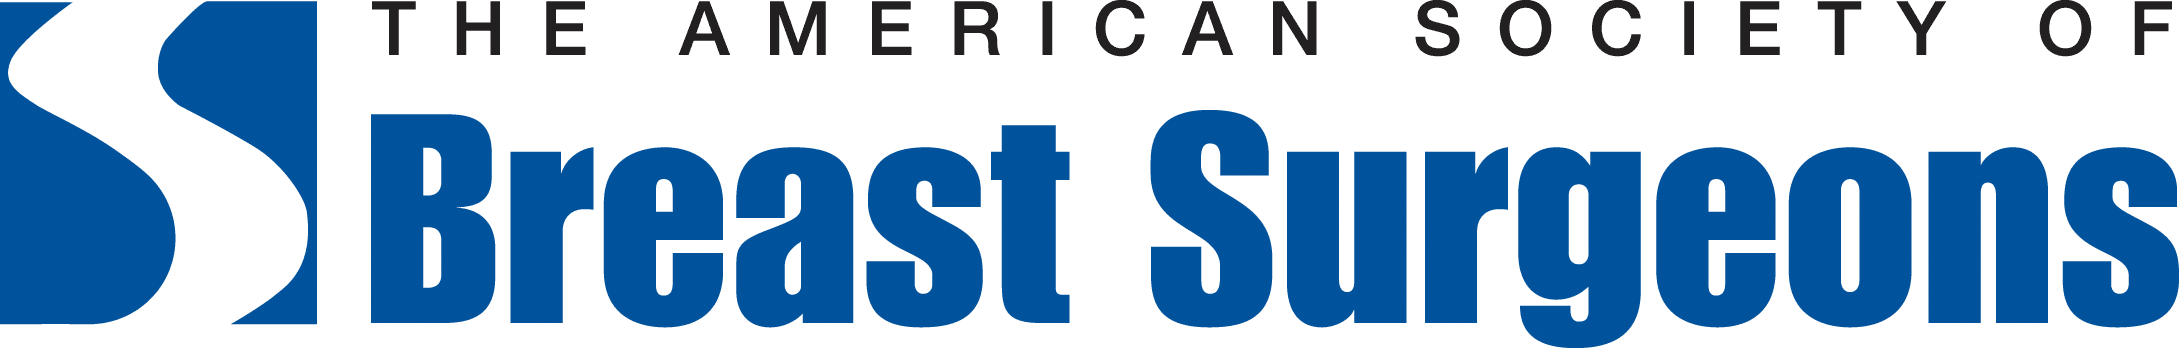 asbs logo blue